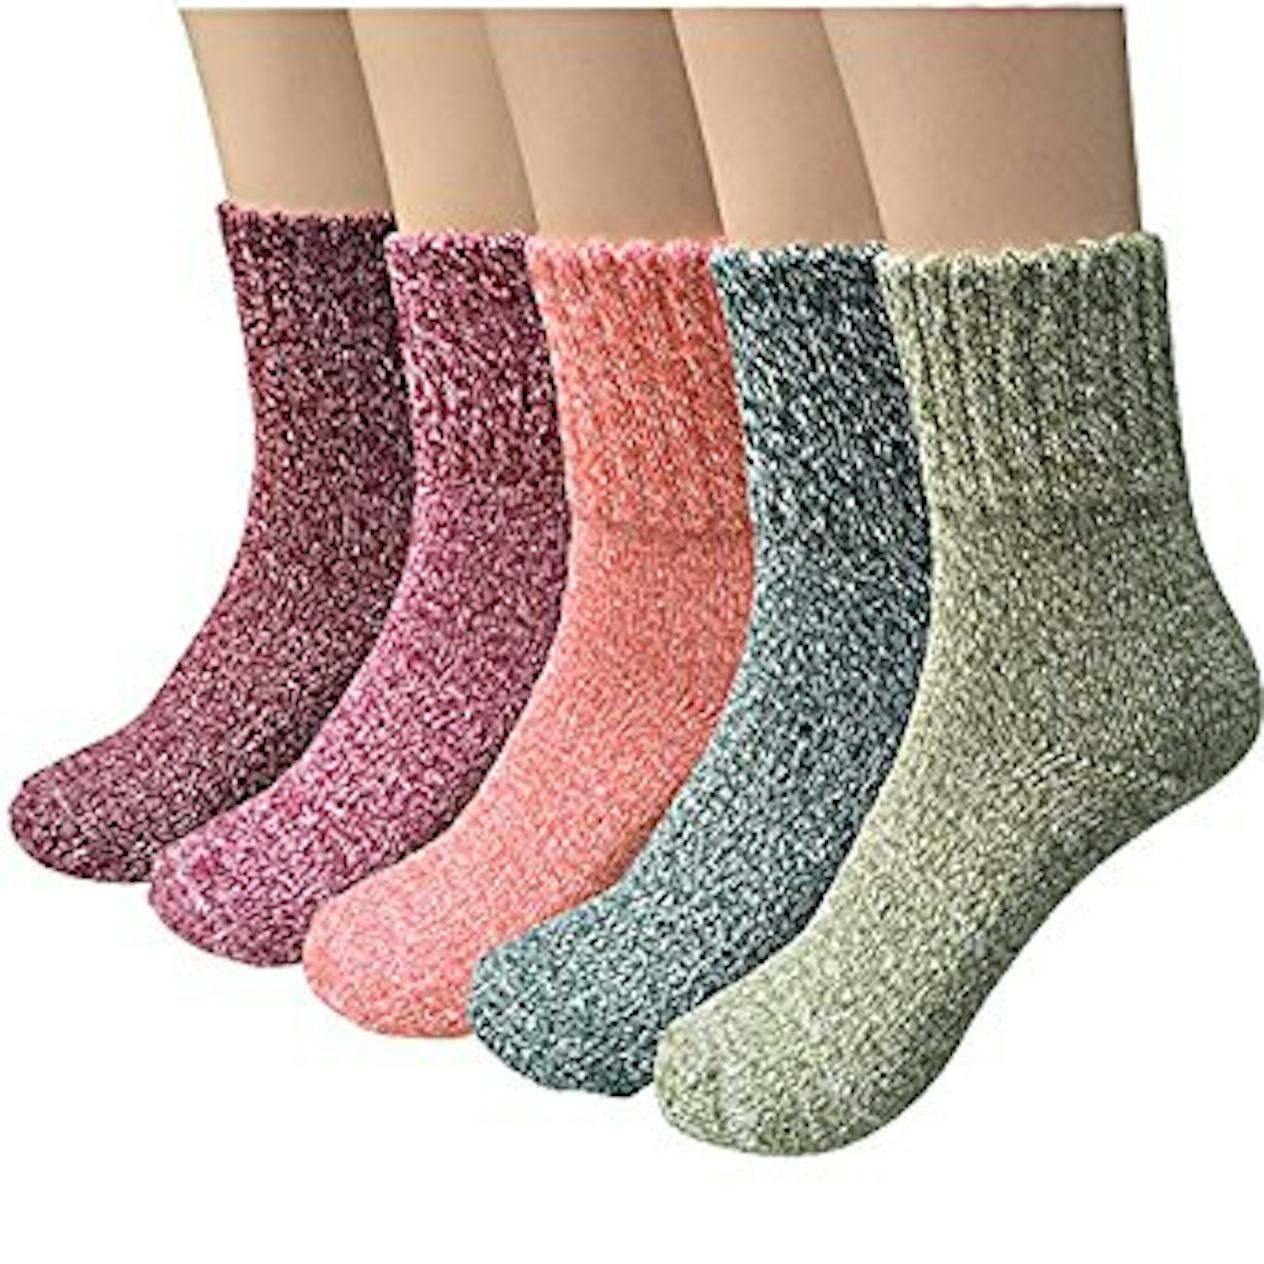 foot warming socks